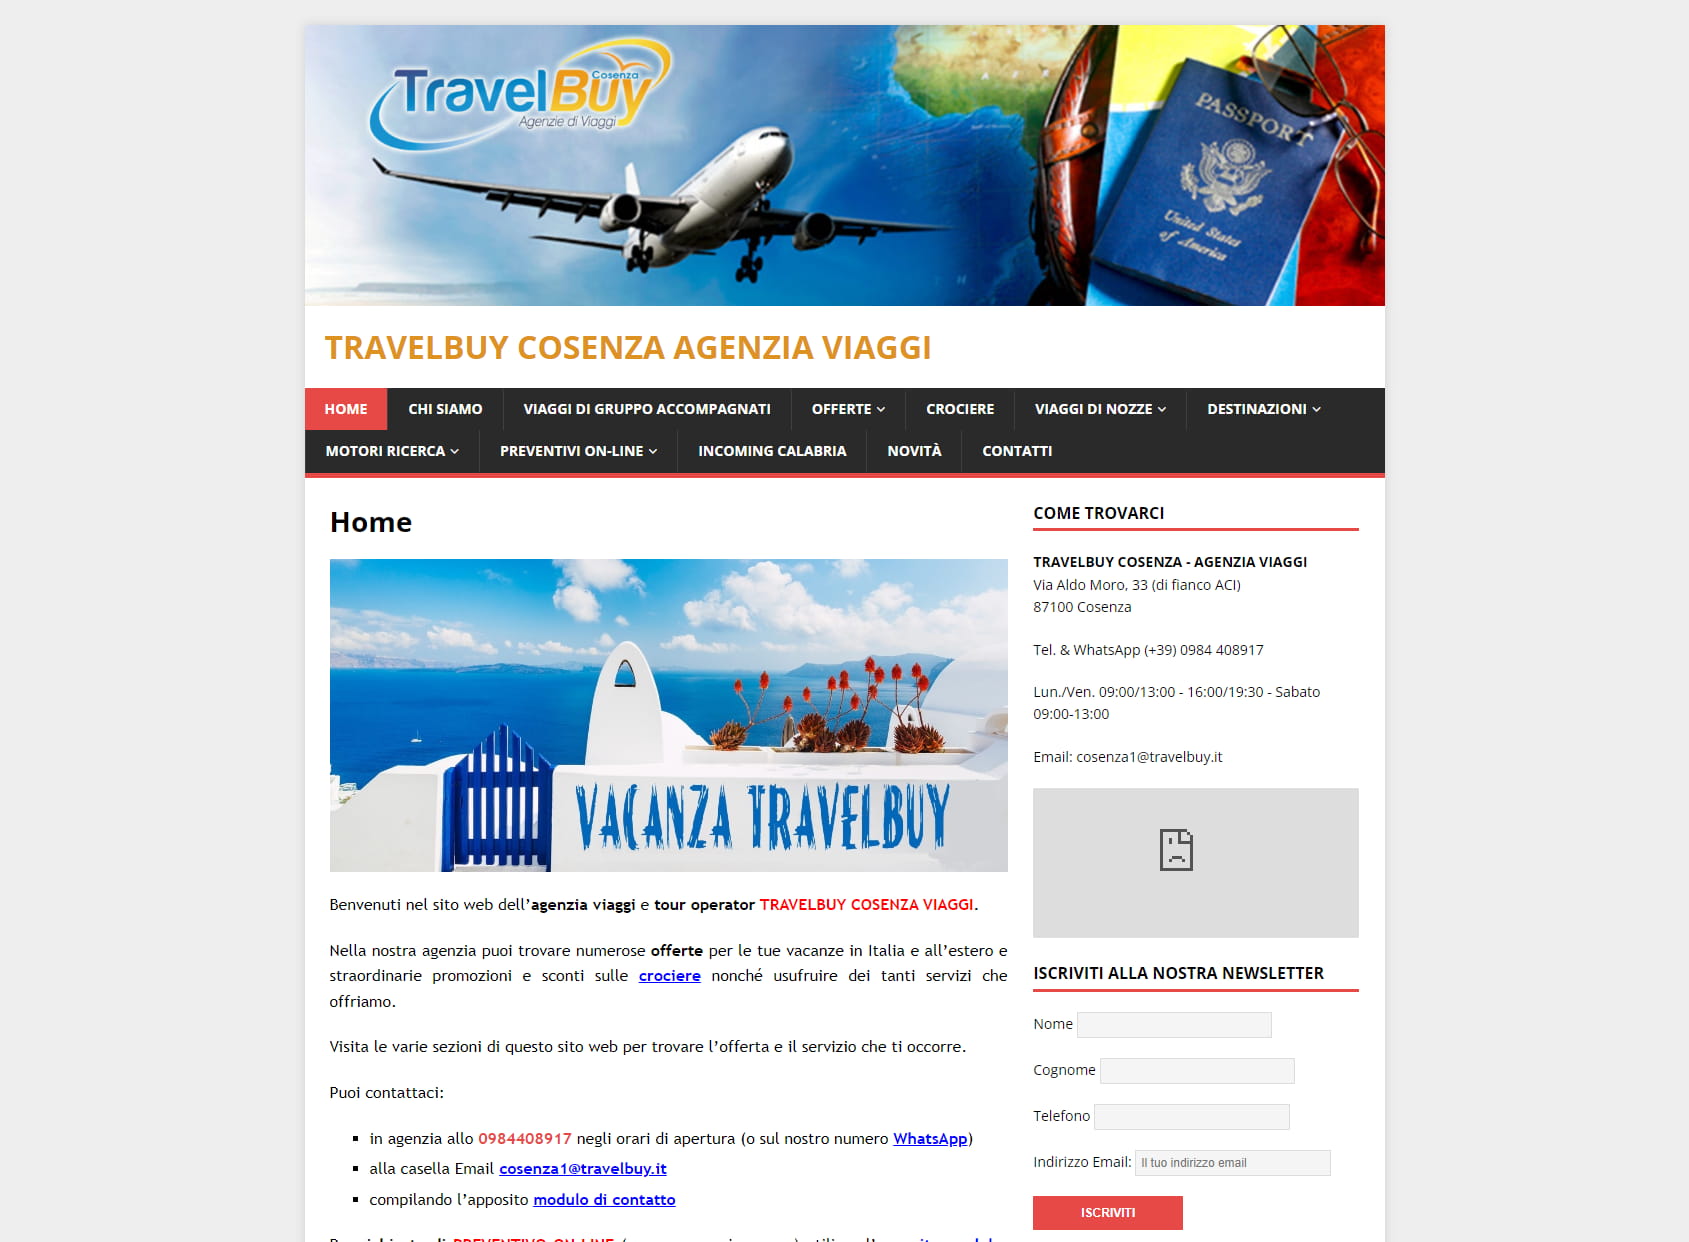 Travel Agency TRAVELBUY COSENZA (TG TRAVEL)